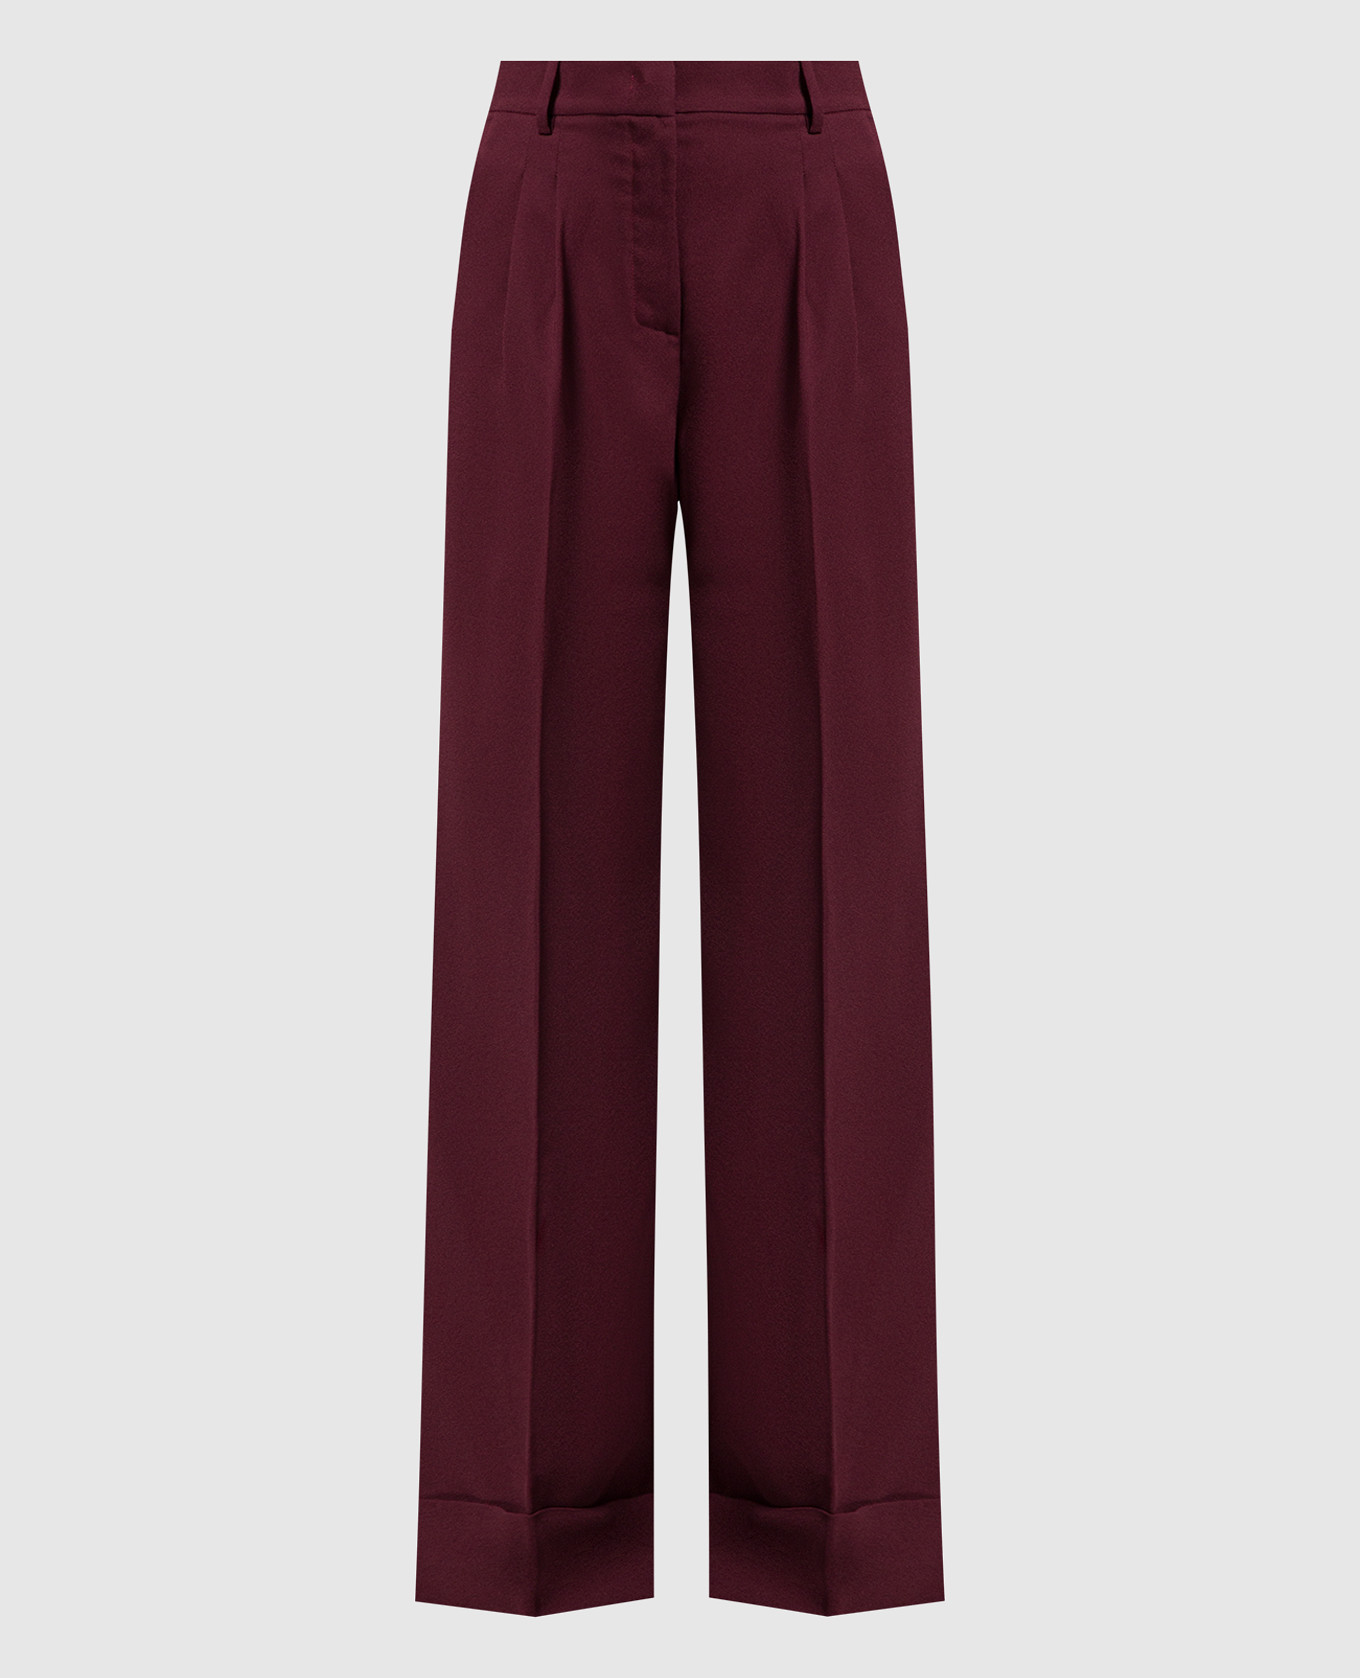 Natalie burgundy pants